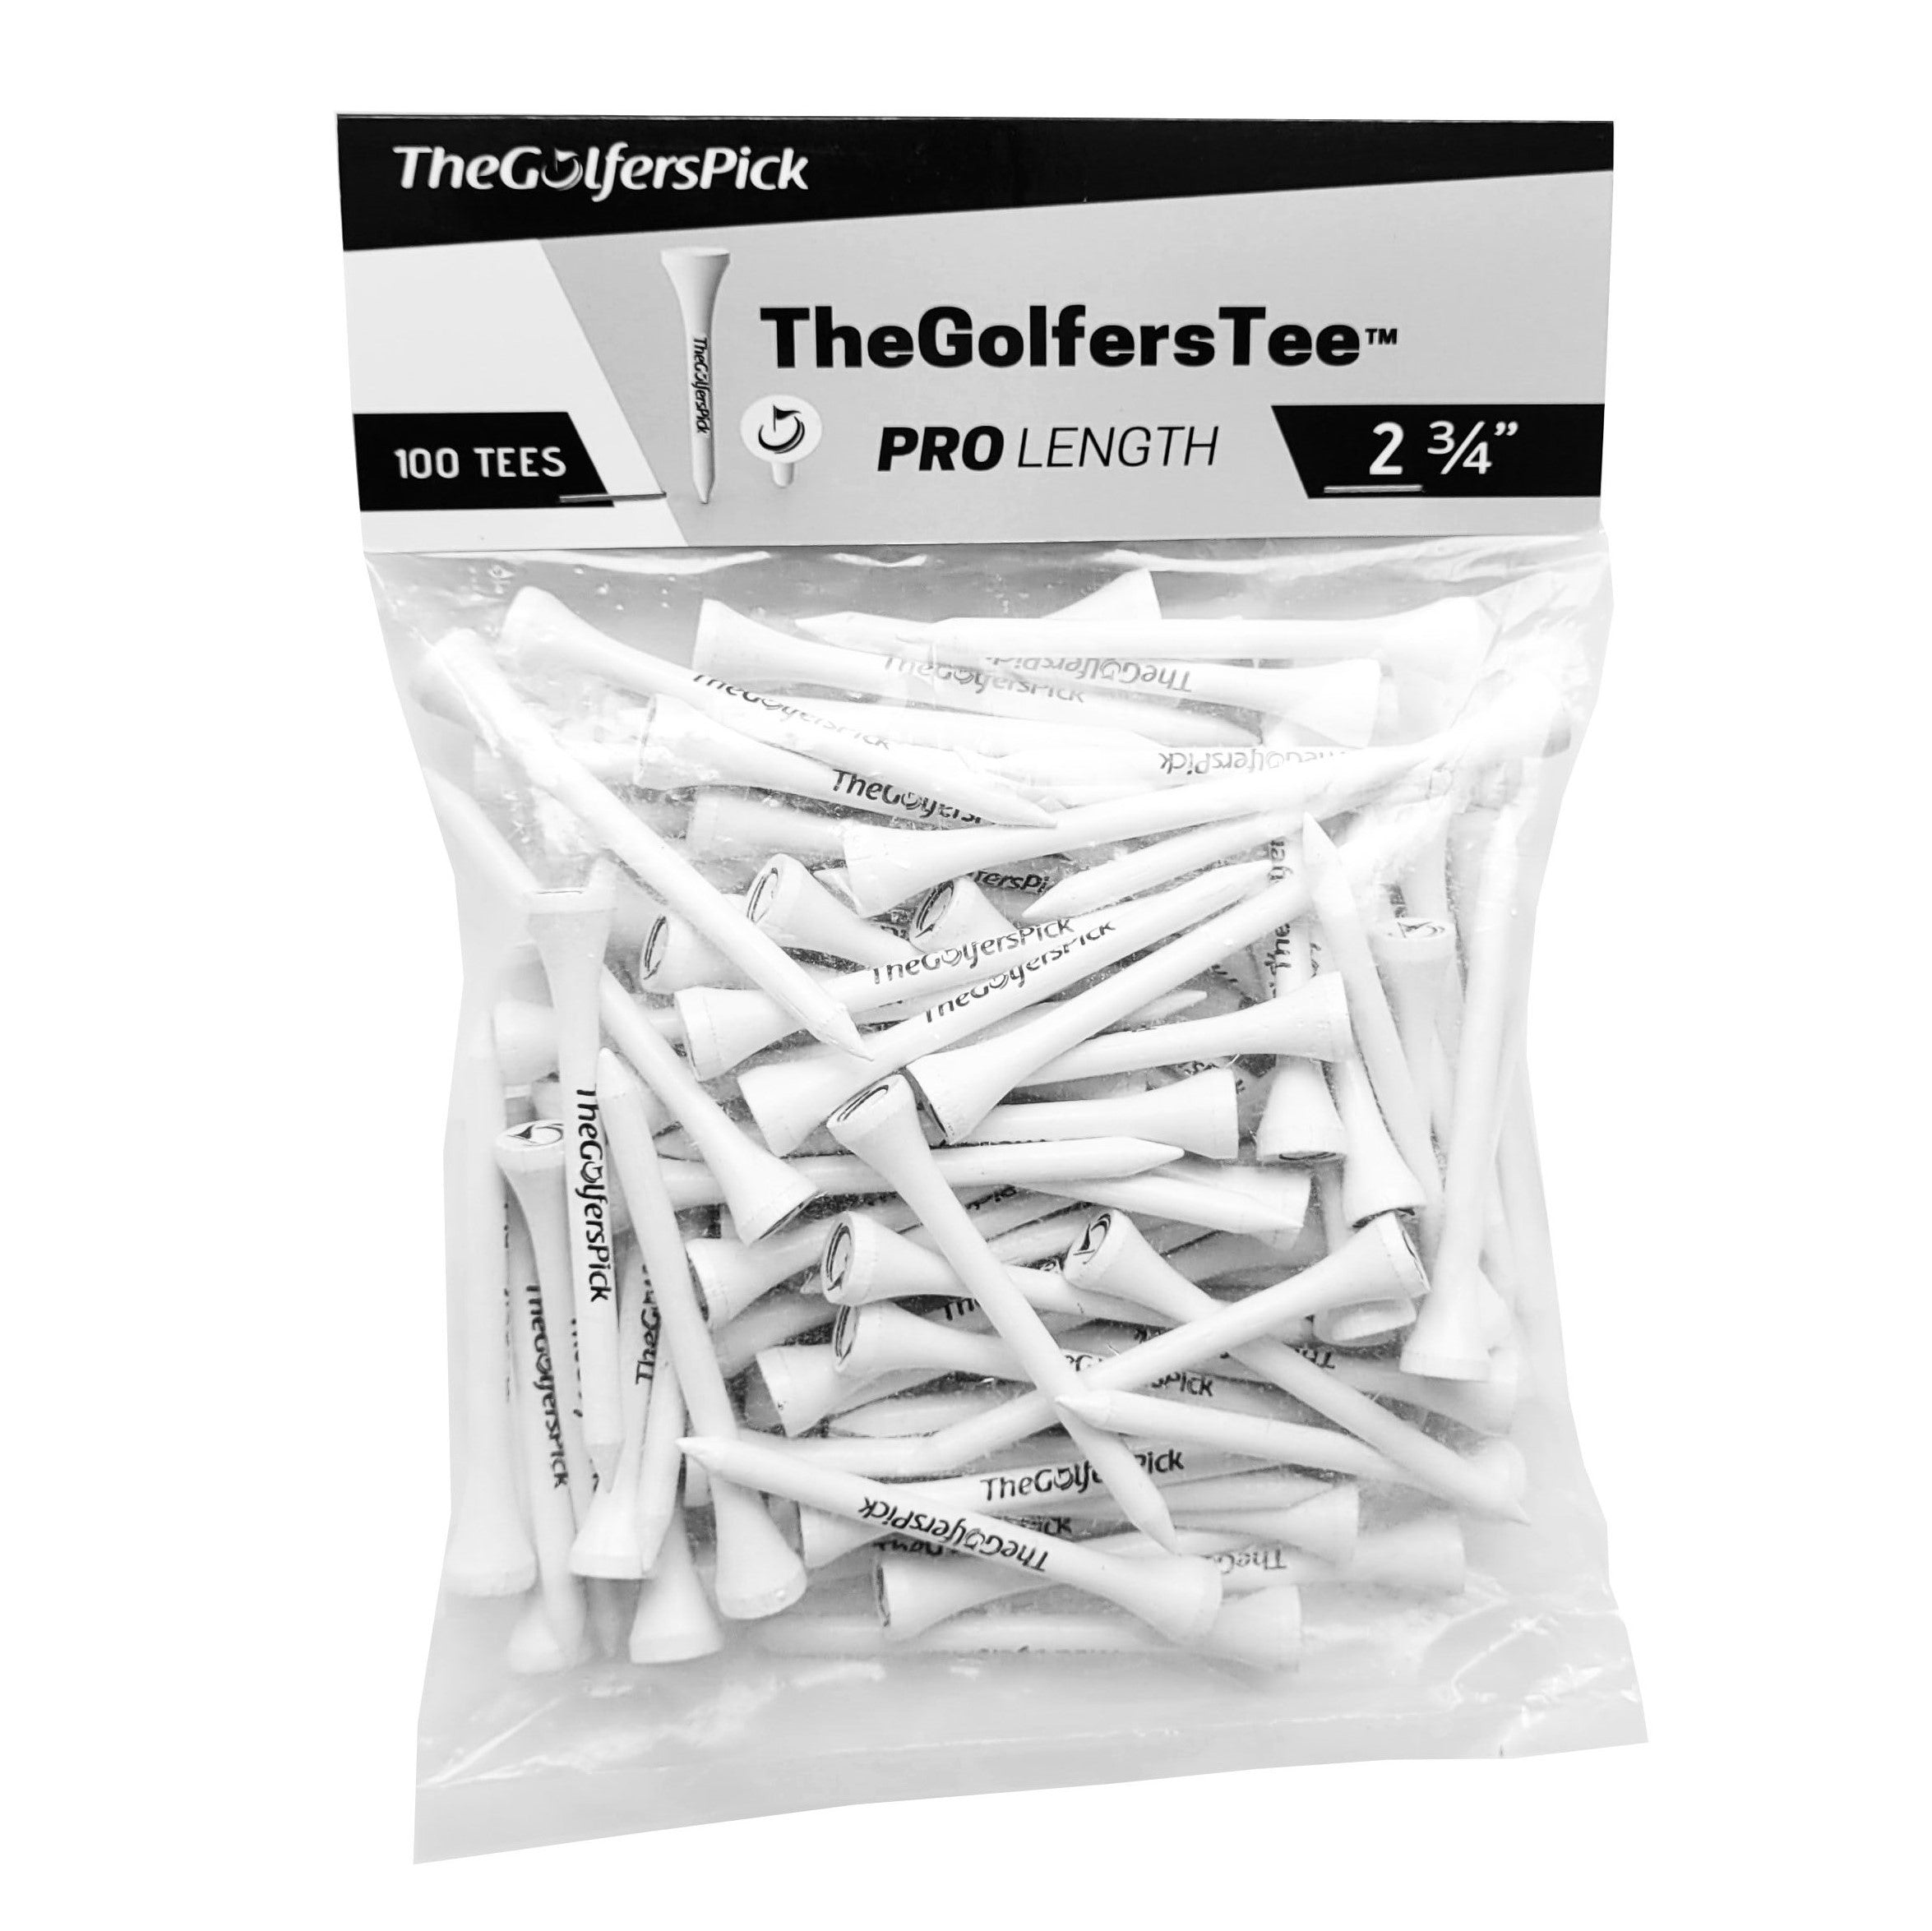 TheGolfersTee™ Pro Length | Premium Wooden Golf Tees | 100pcs Package